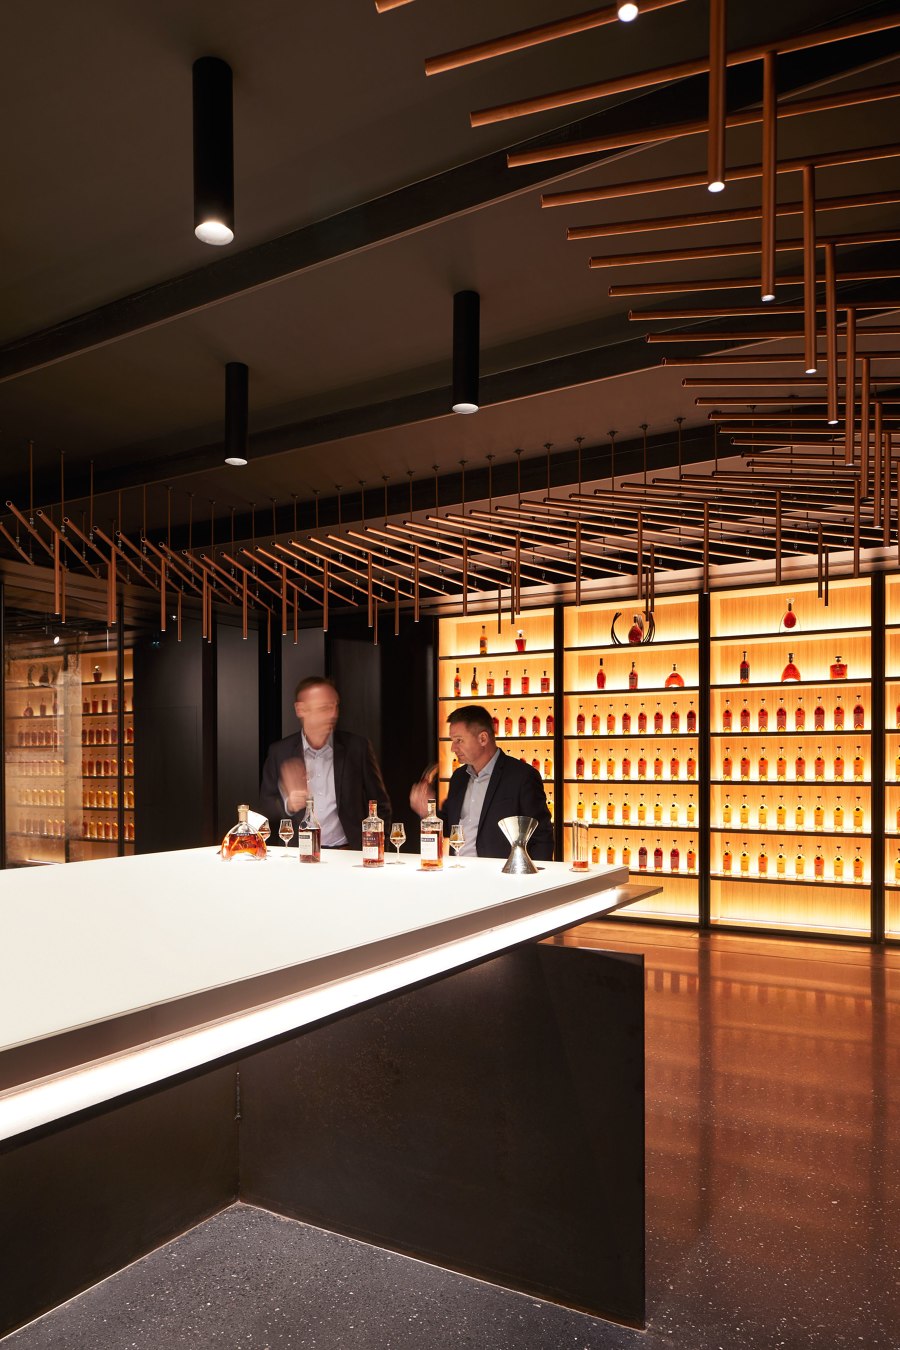 Tasting Room for Master Blenders von Elluin Duolé Gillon architecture | Club-Interieurs